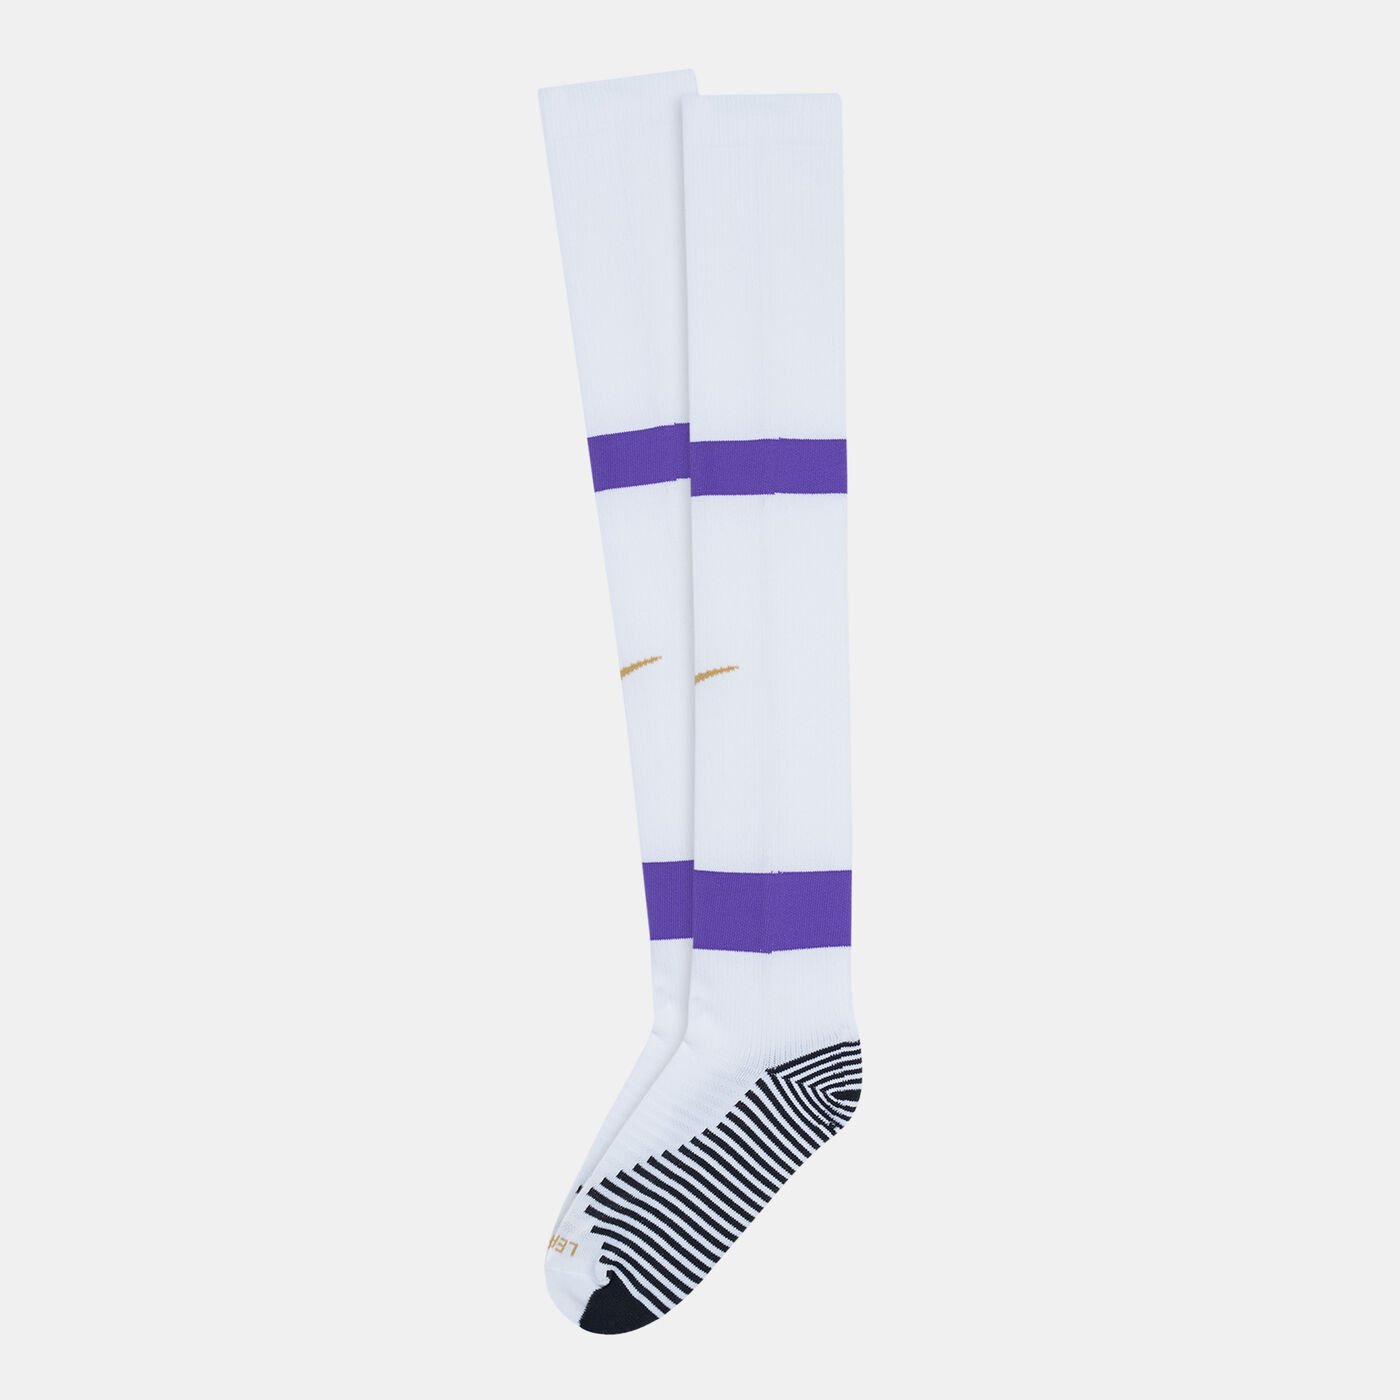 MatchFit Knee-High Football Socks